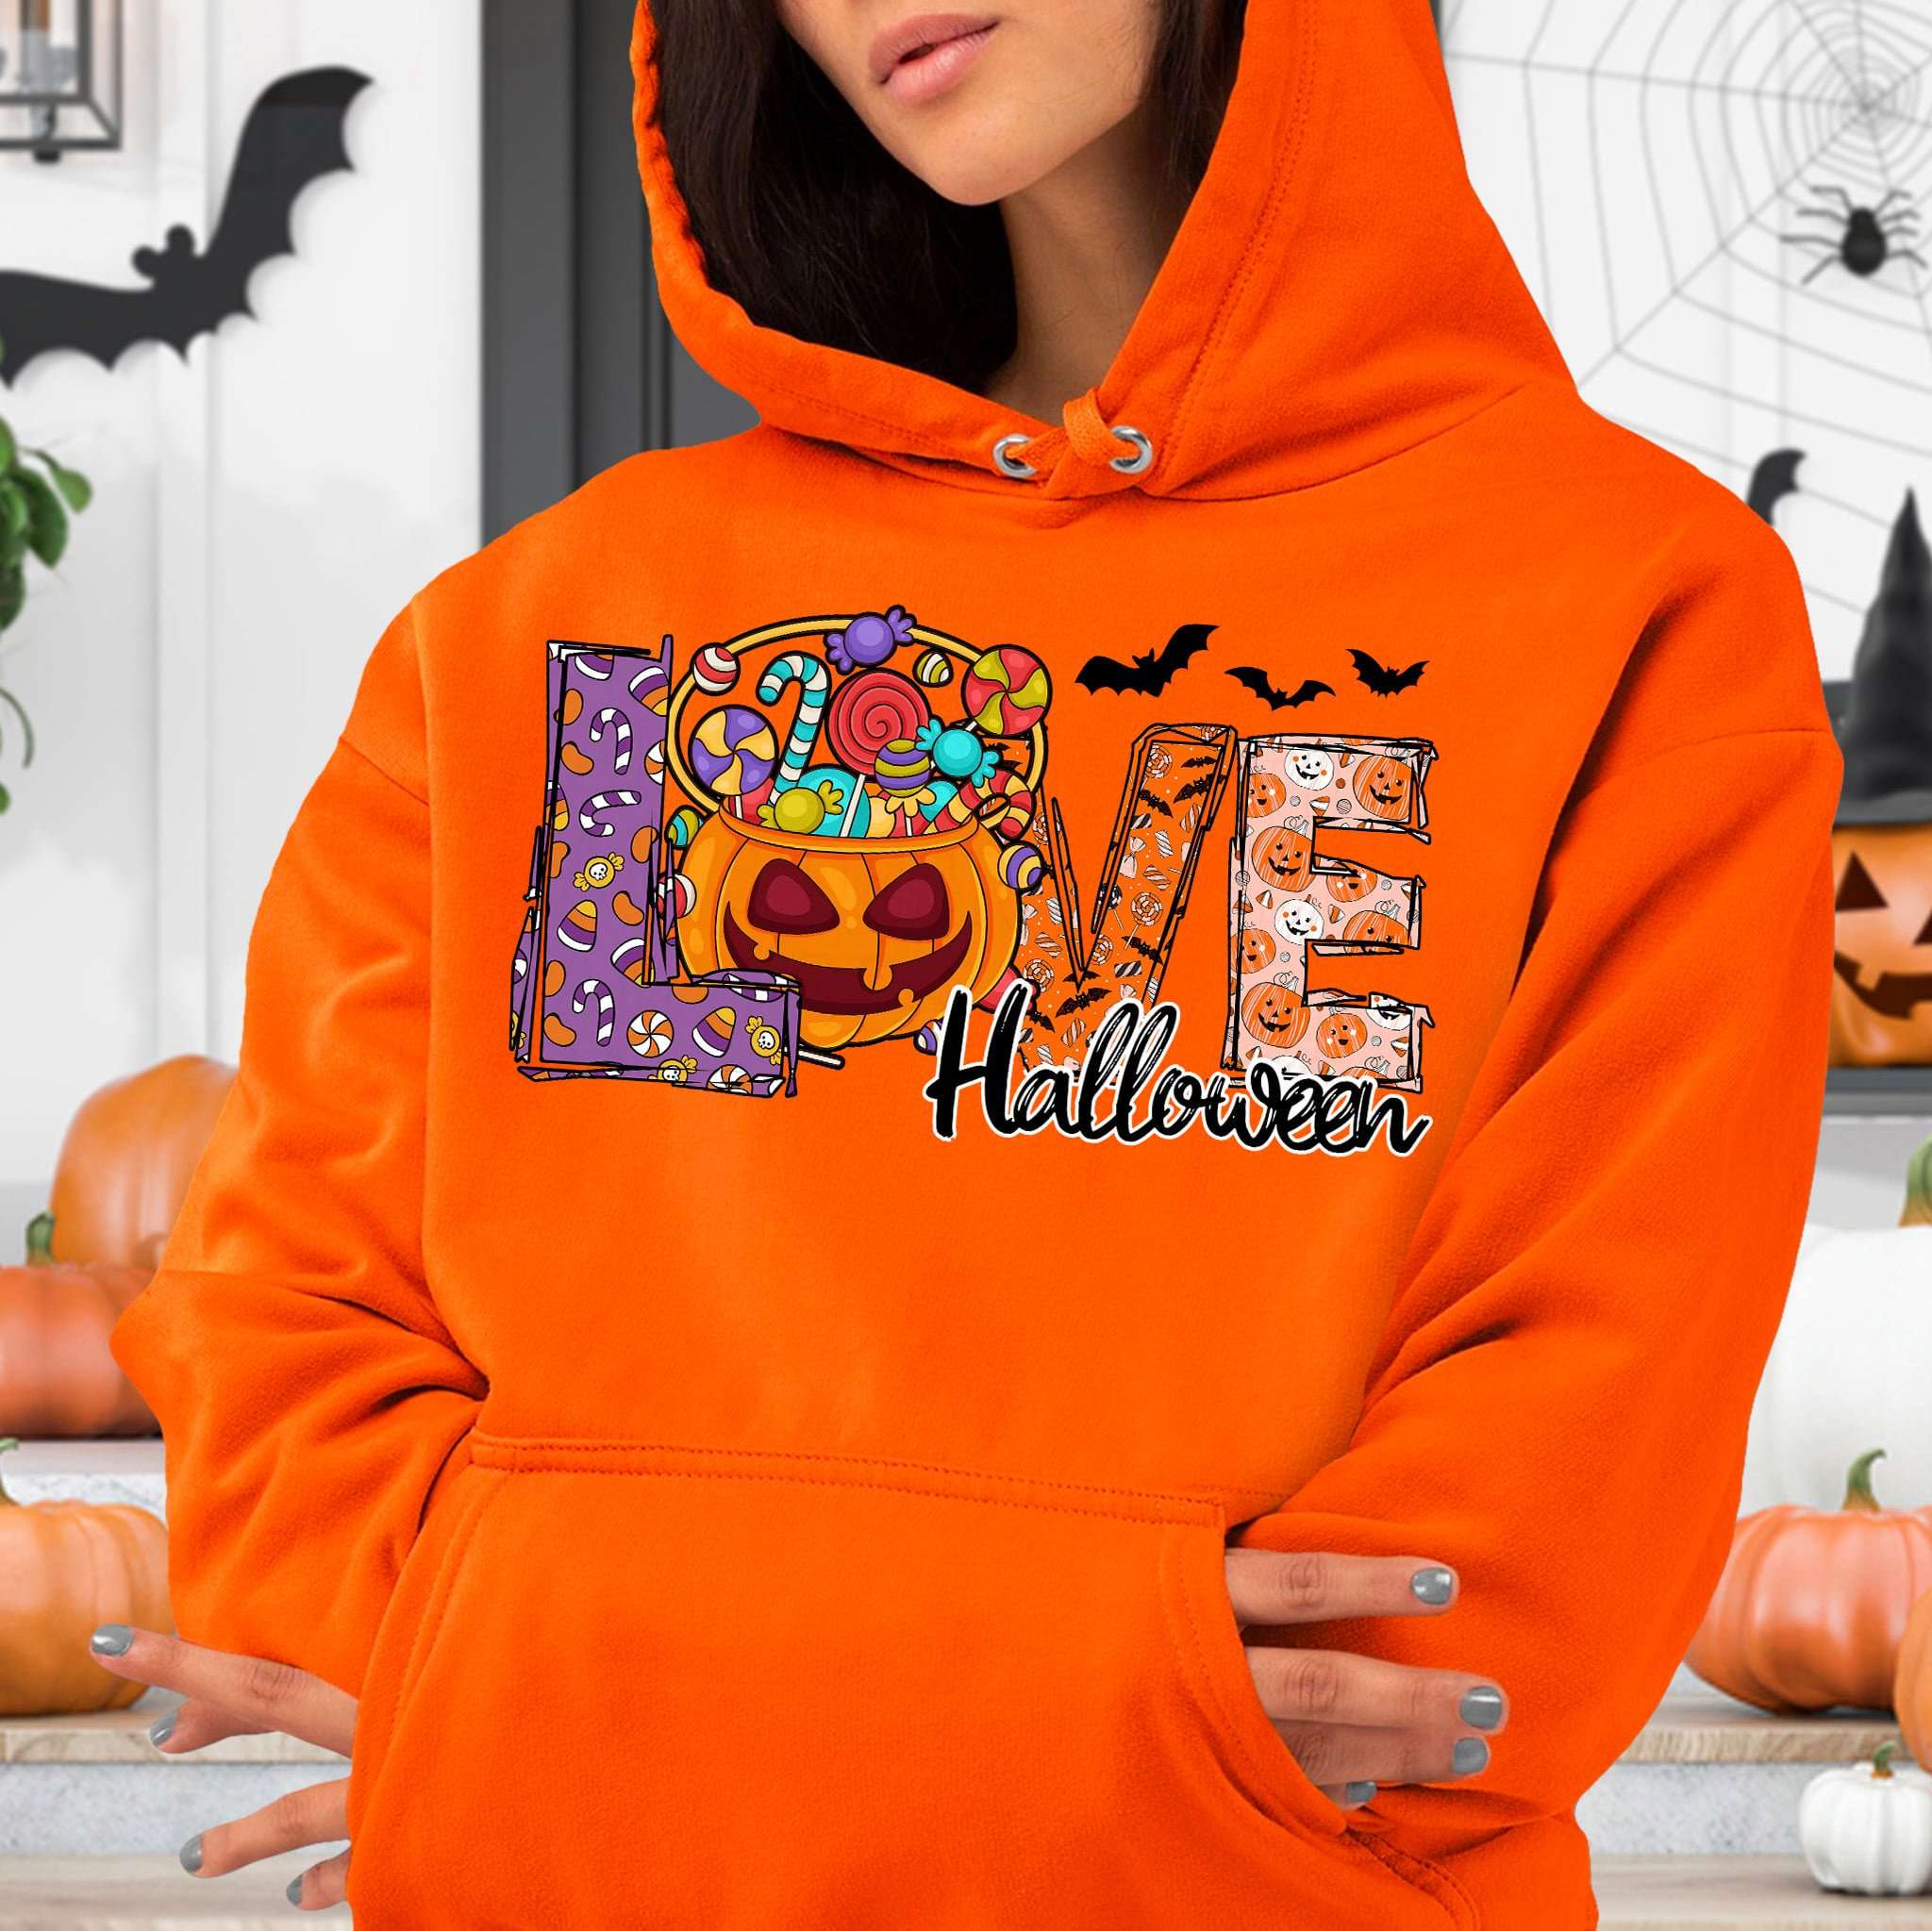 Love halloween - Trick or treat, Halloween pumpkin and candy